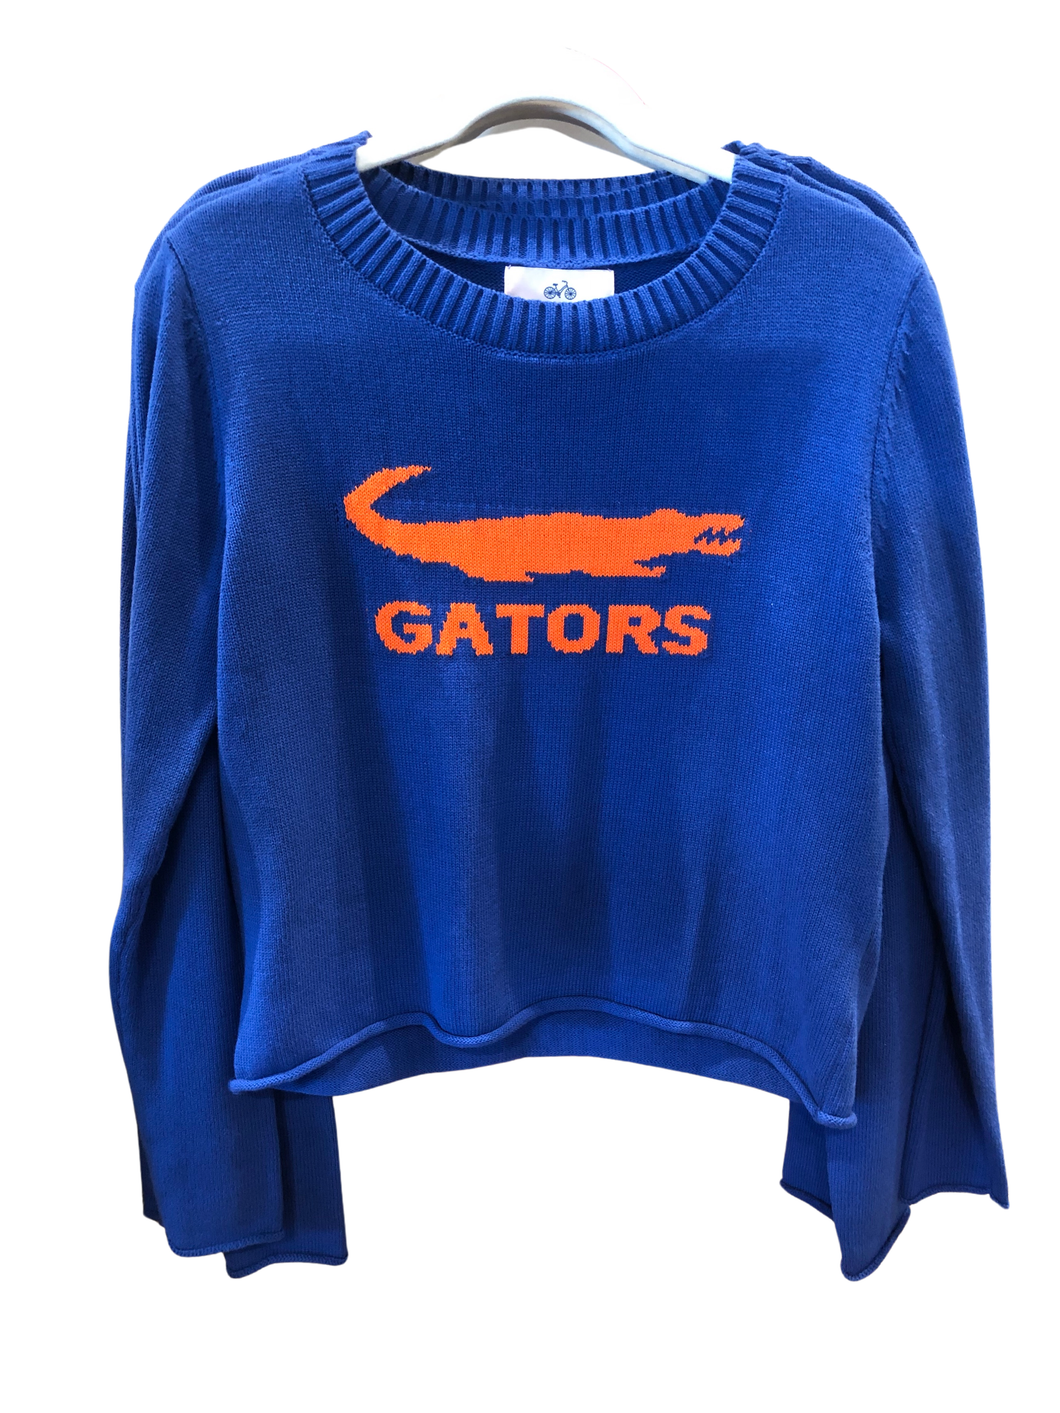 Florida Gators Crewneck Sweater - Royal Blue w/ Orange